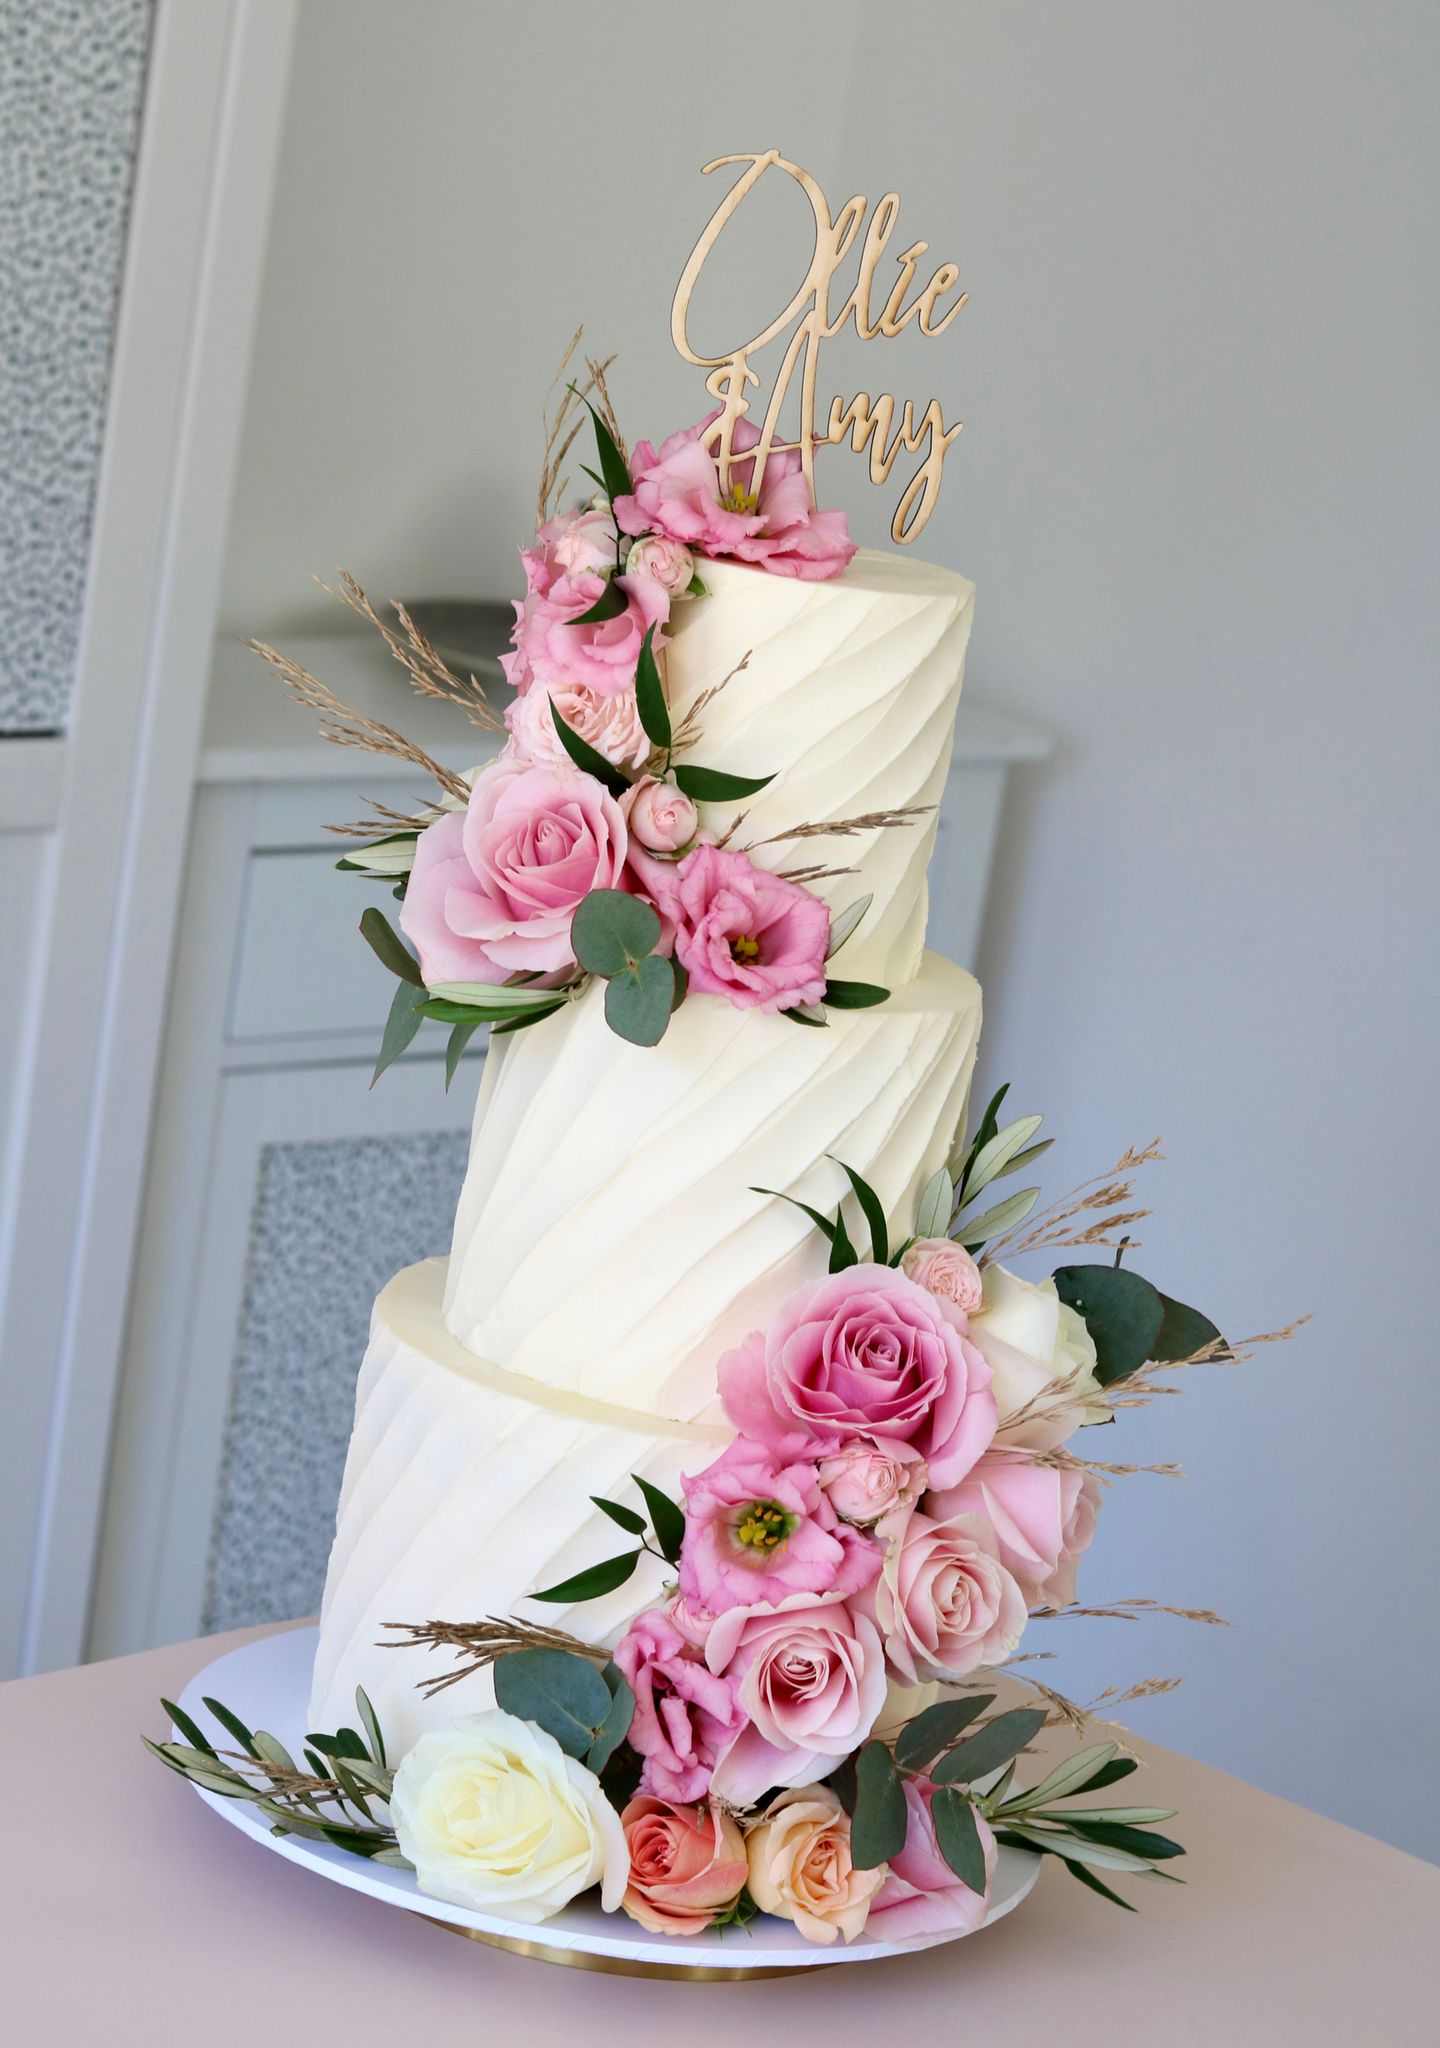 Personalised wedding cake topper